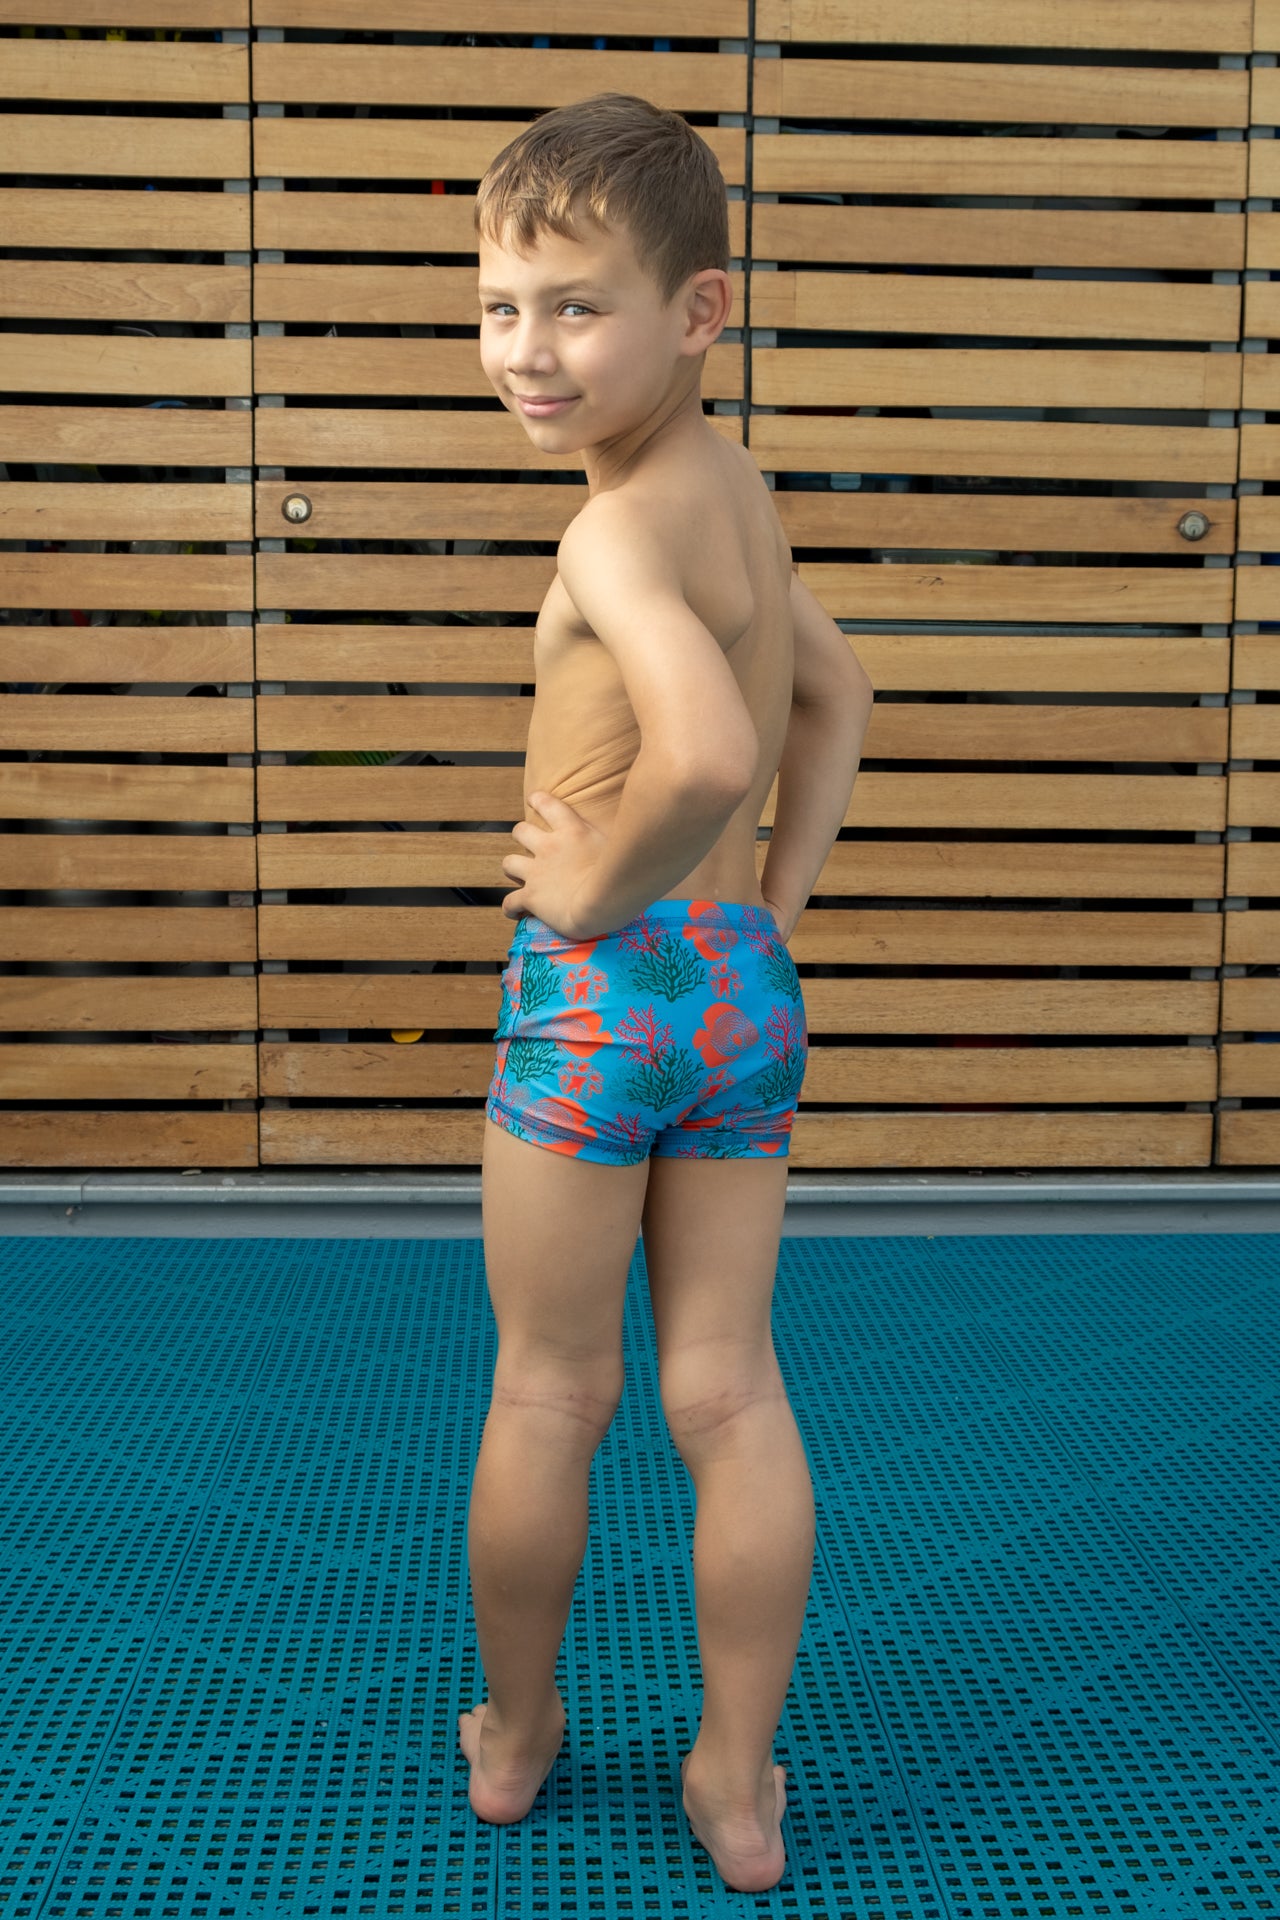 TANGA KIDS -CORALES - OMAR PINZON Swimwear